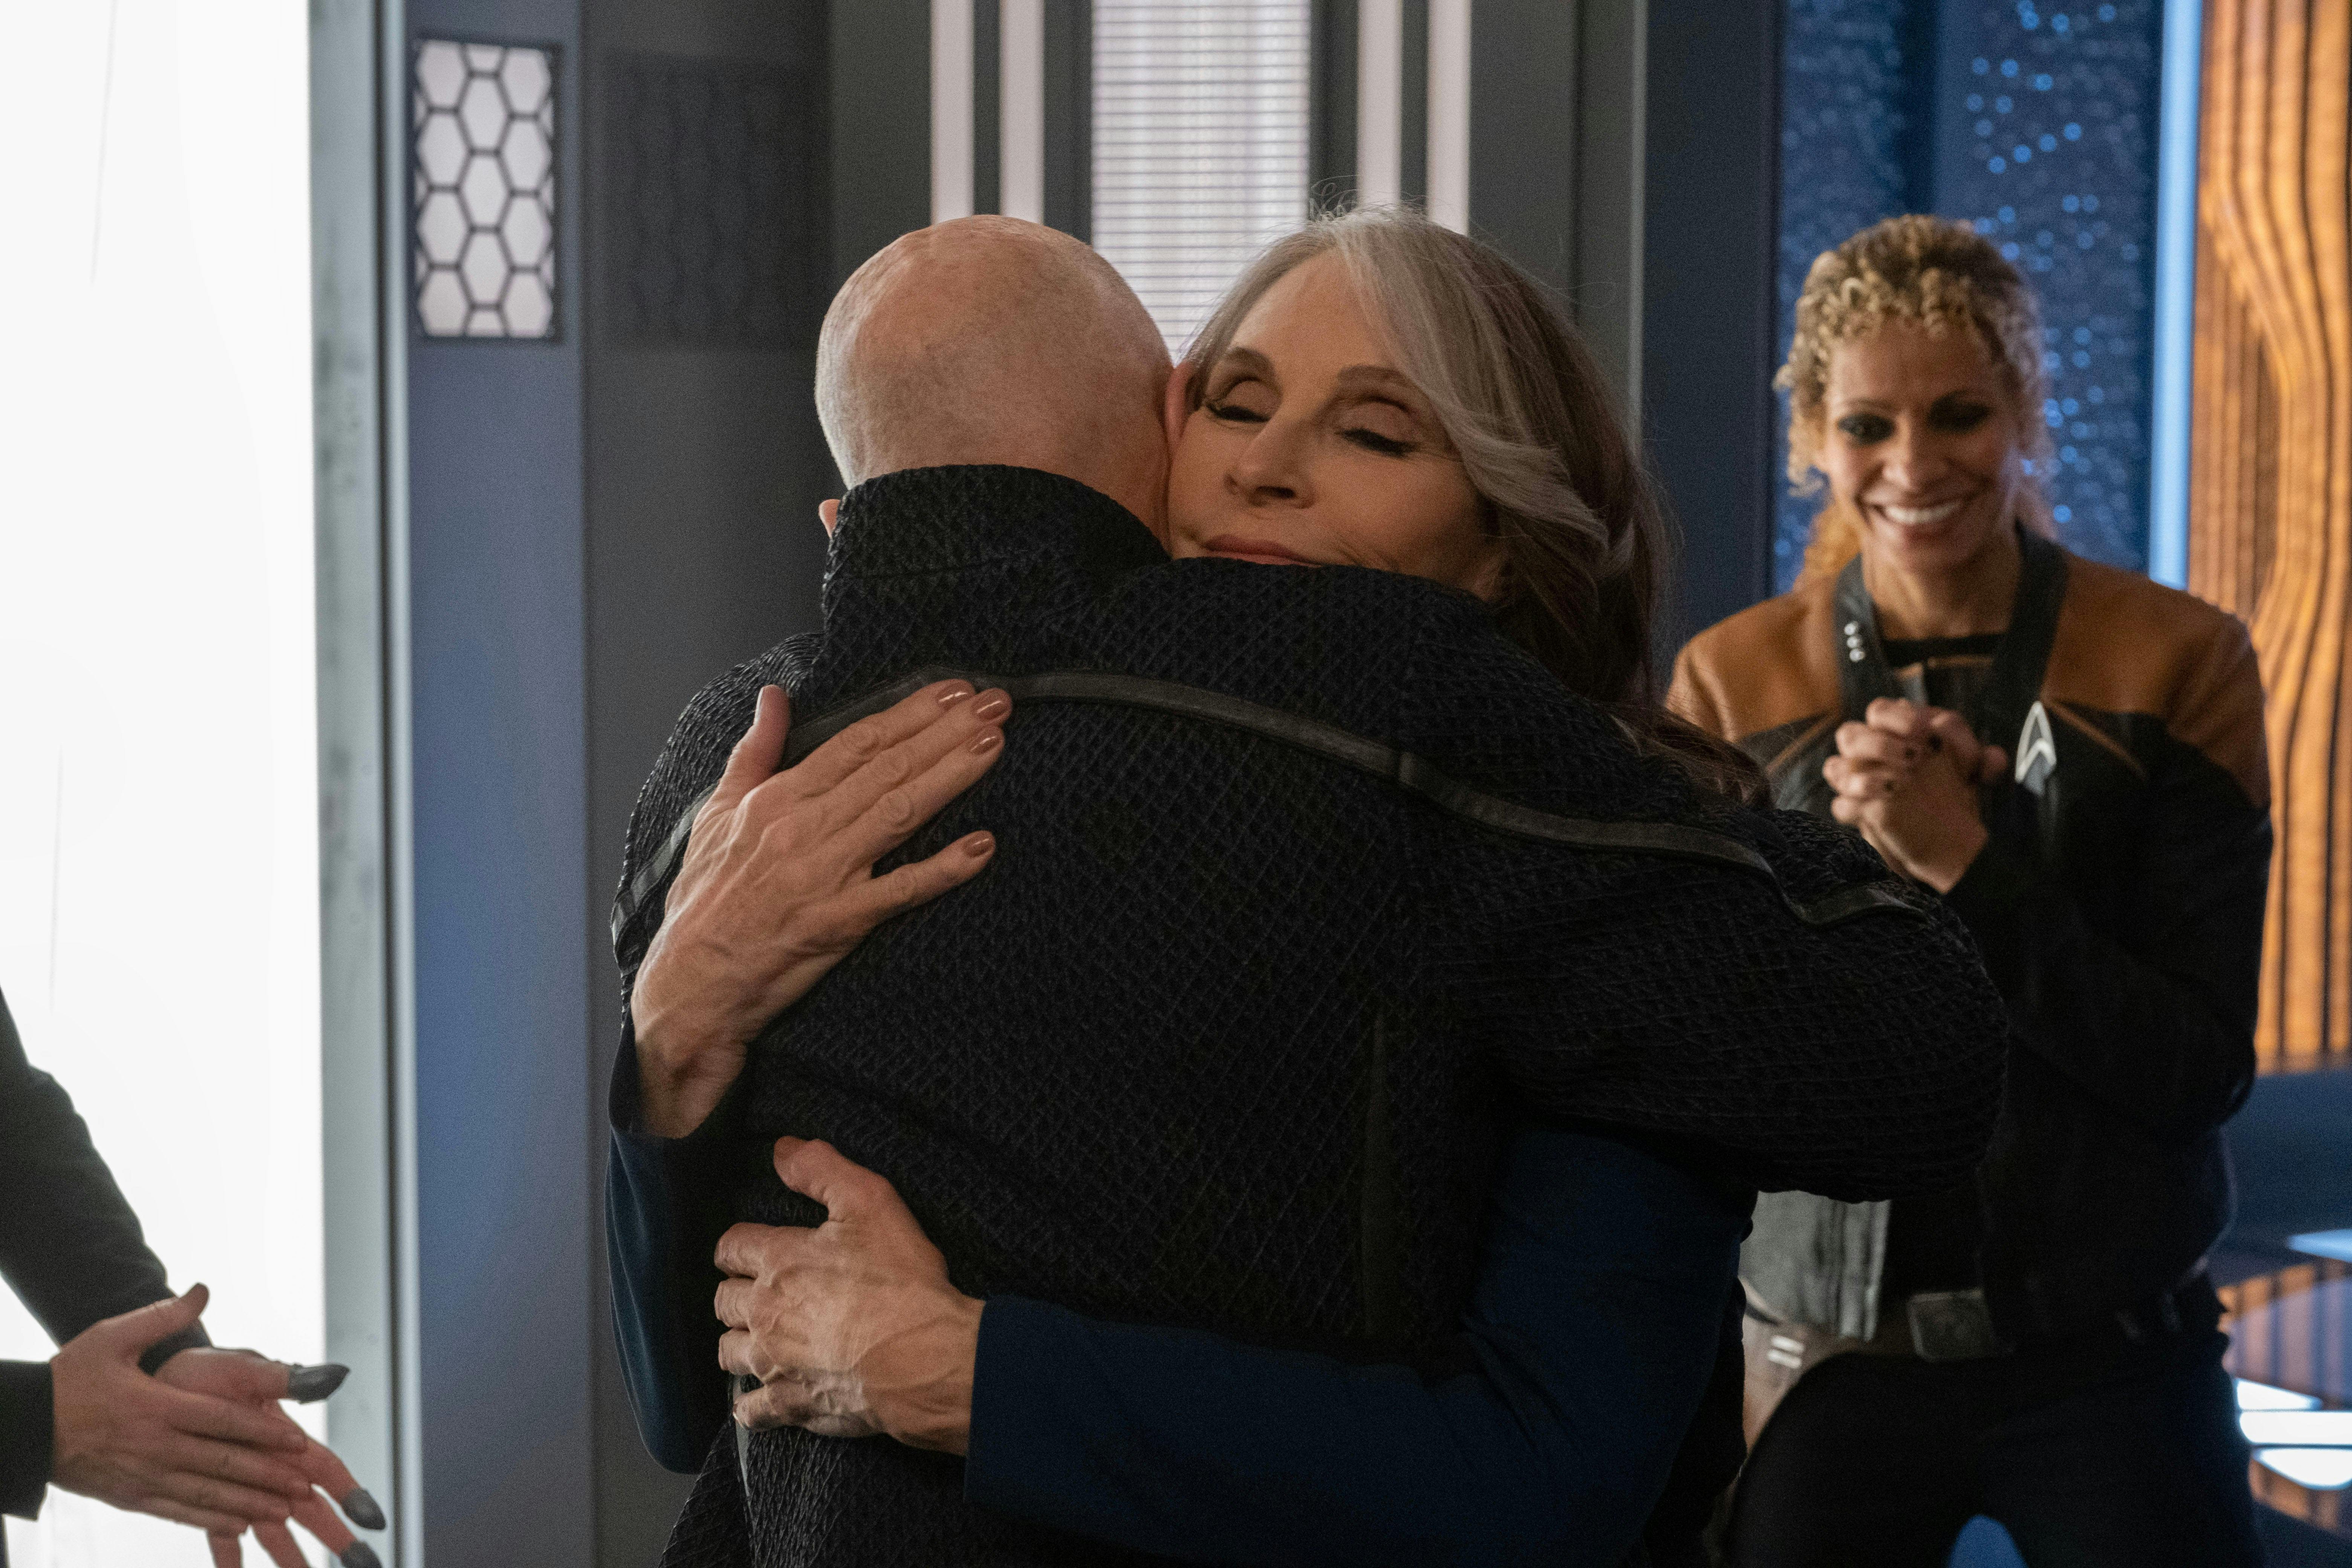 Star Trek: Picard BTS still - in the transporter room, Patrick Stewart and Gates McFadden hug as Michelle Hurd smiles and claps behind them